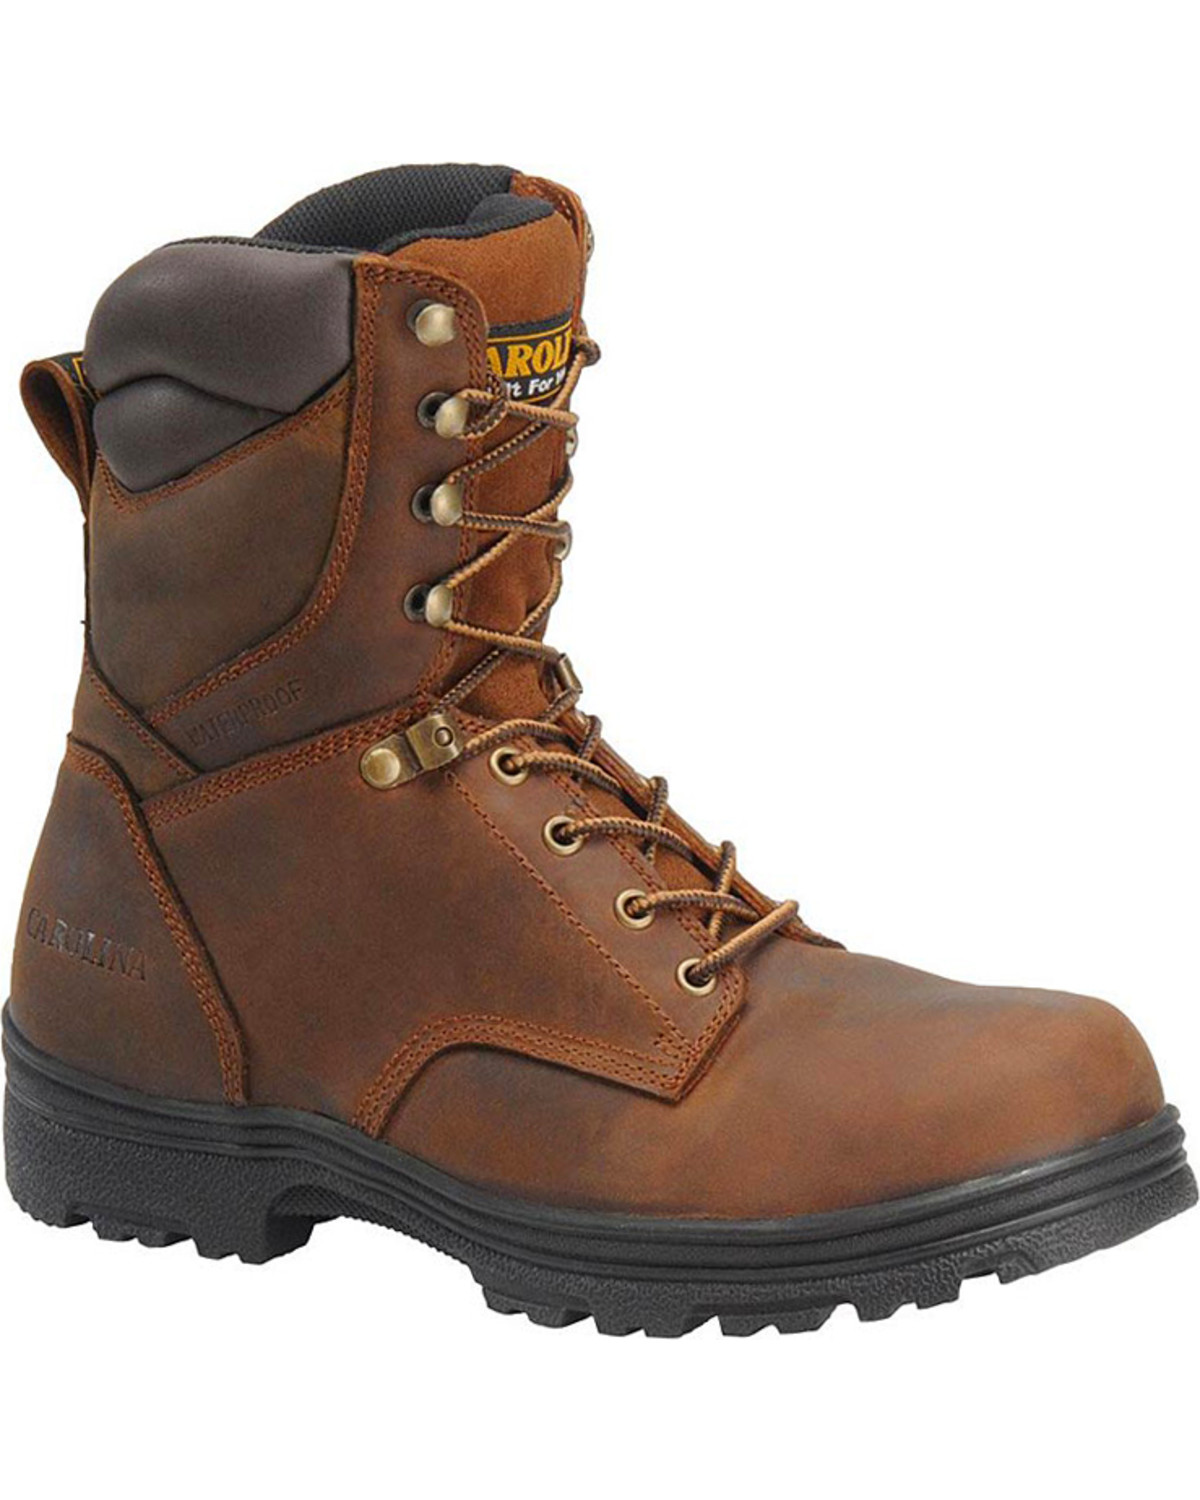 Carolina Men's 8" Waterproof Work Boots - Steel Toe